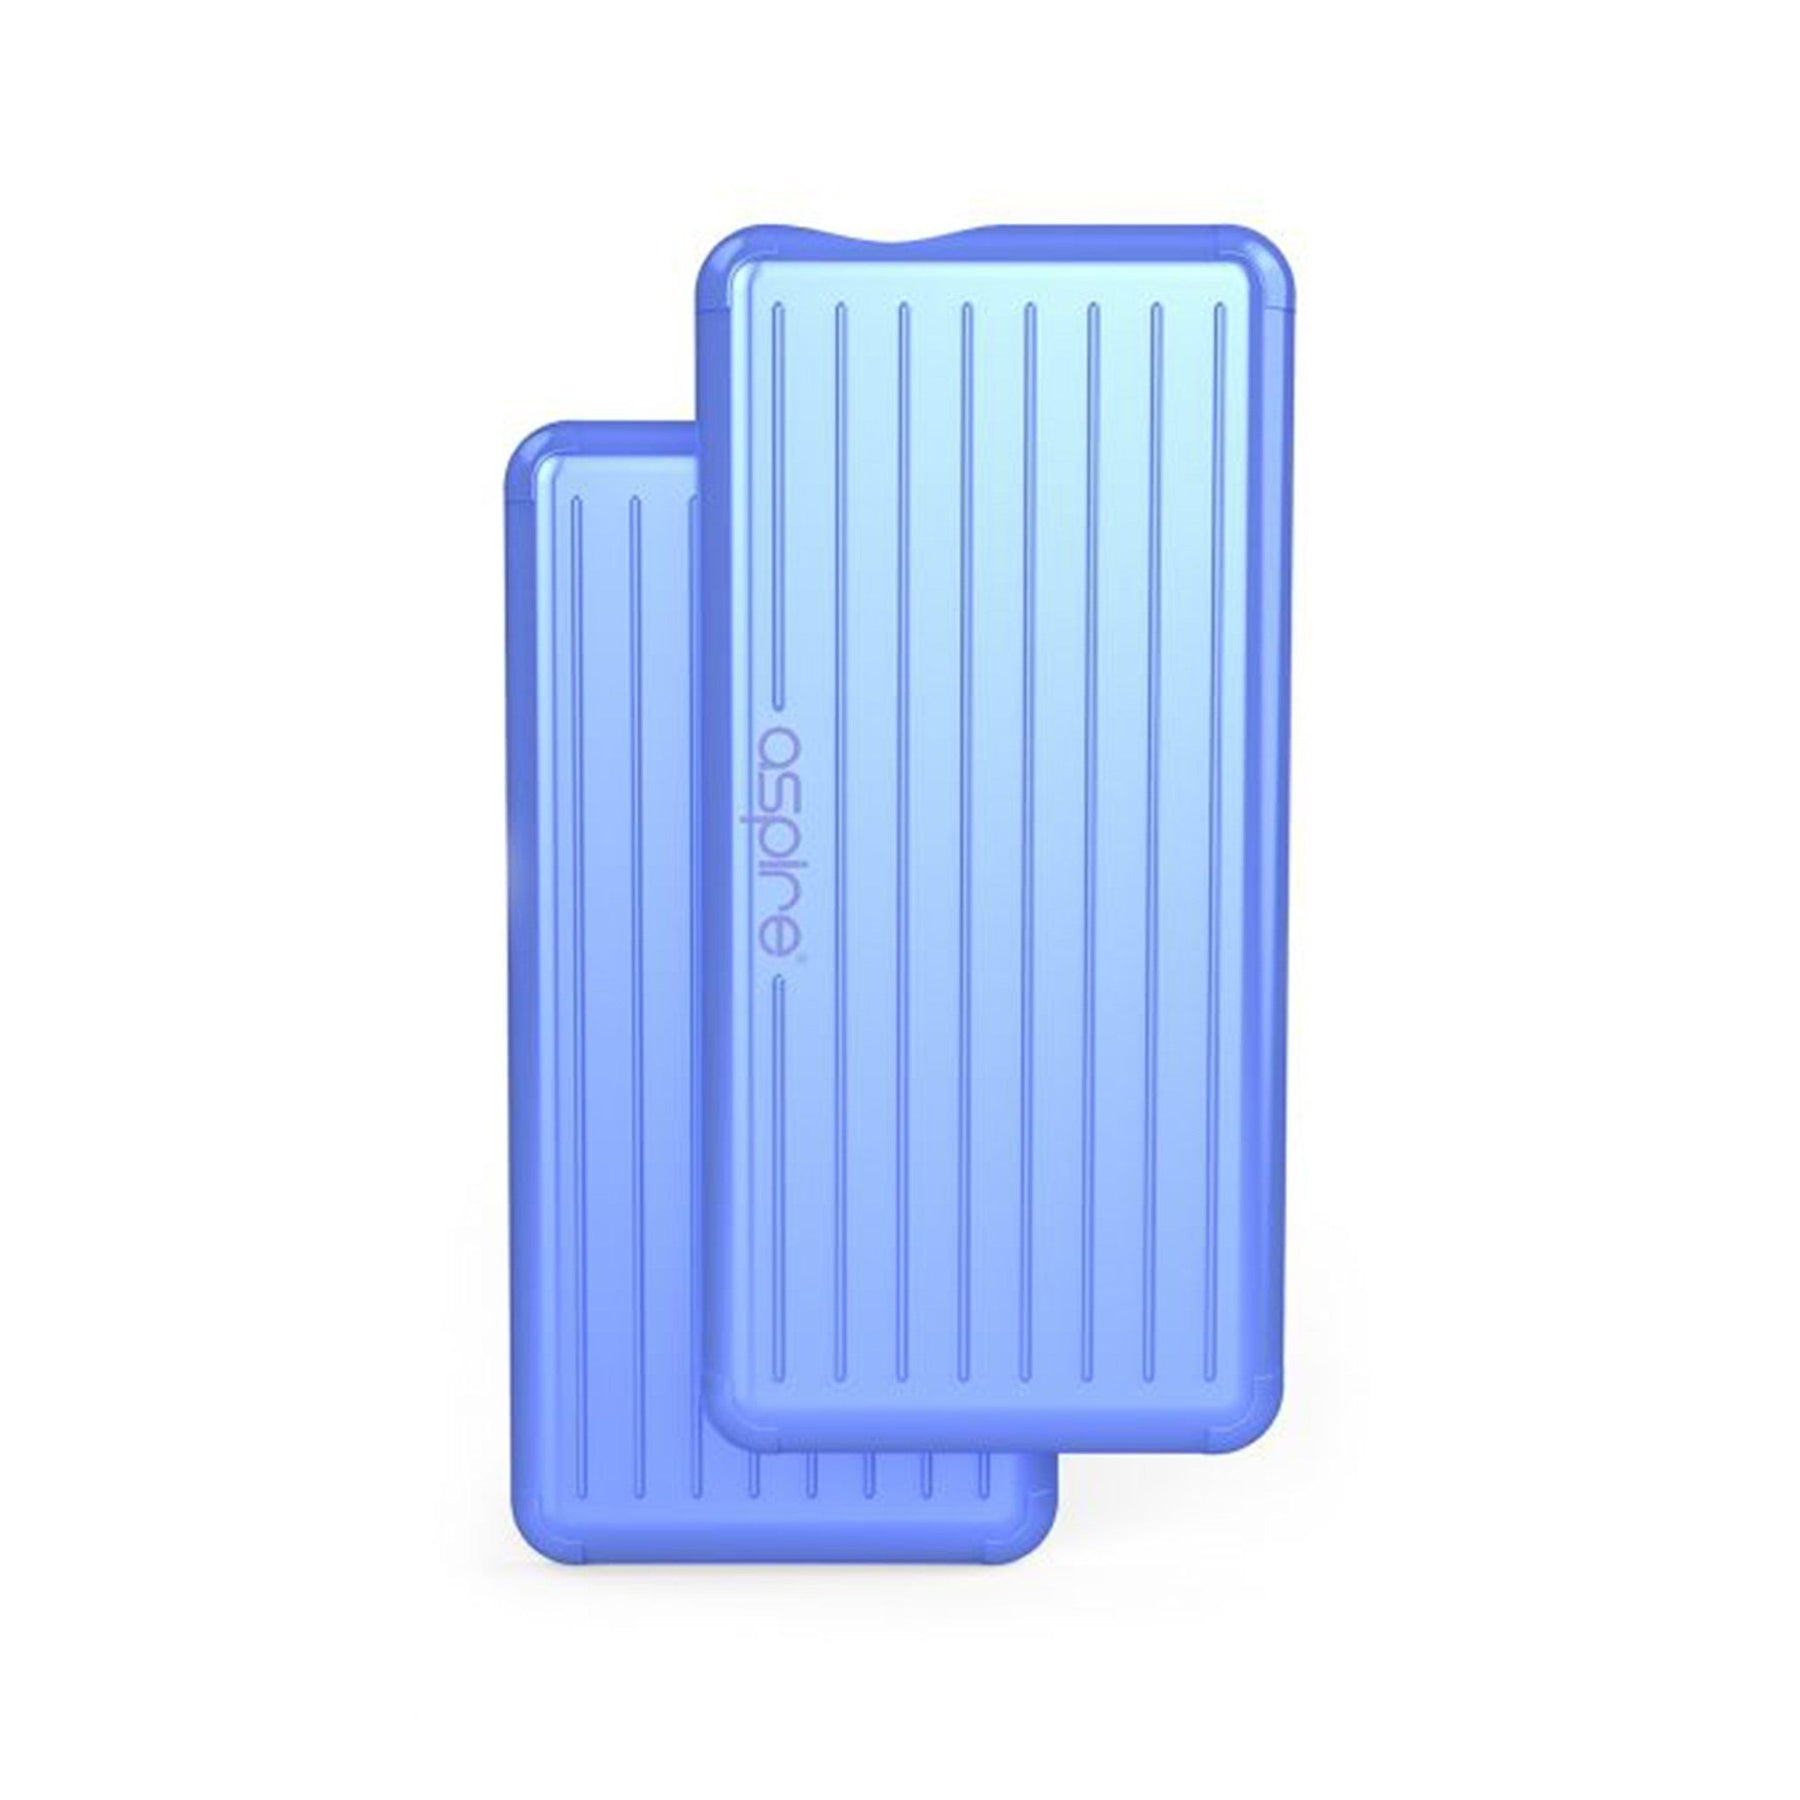 Aspire Puxos Mod Removable Side Panels Blue